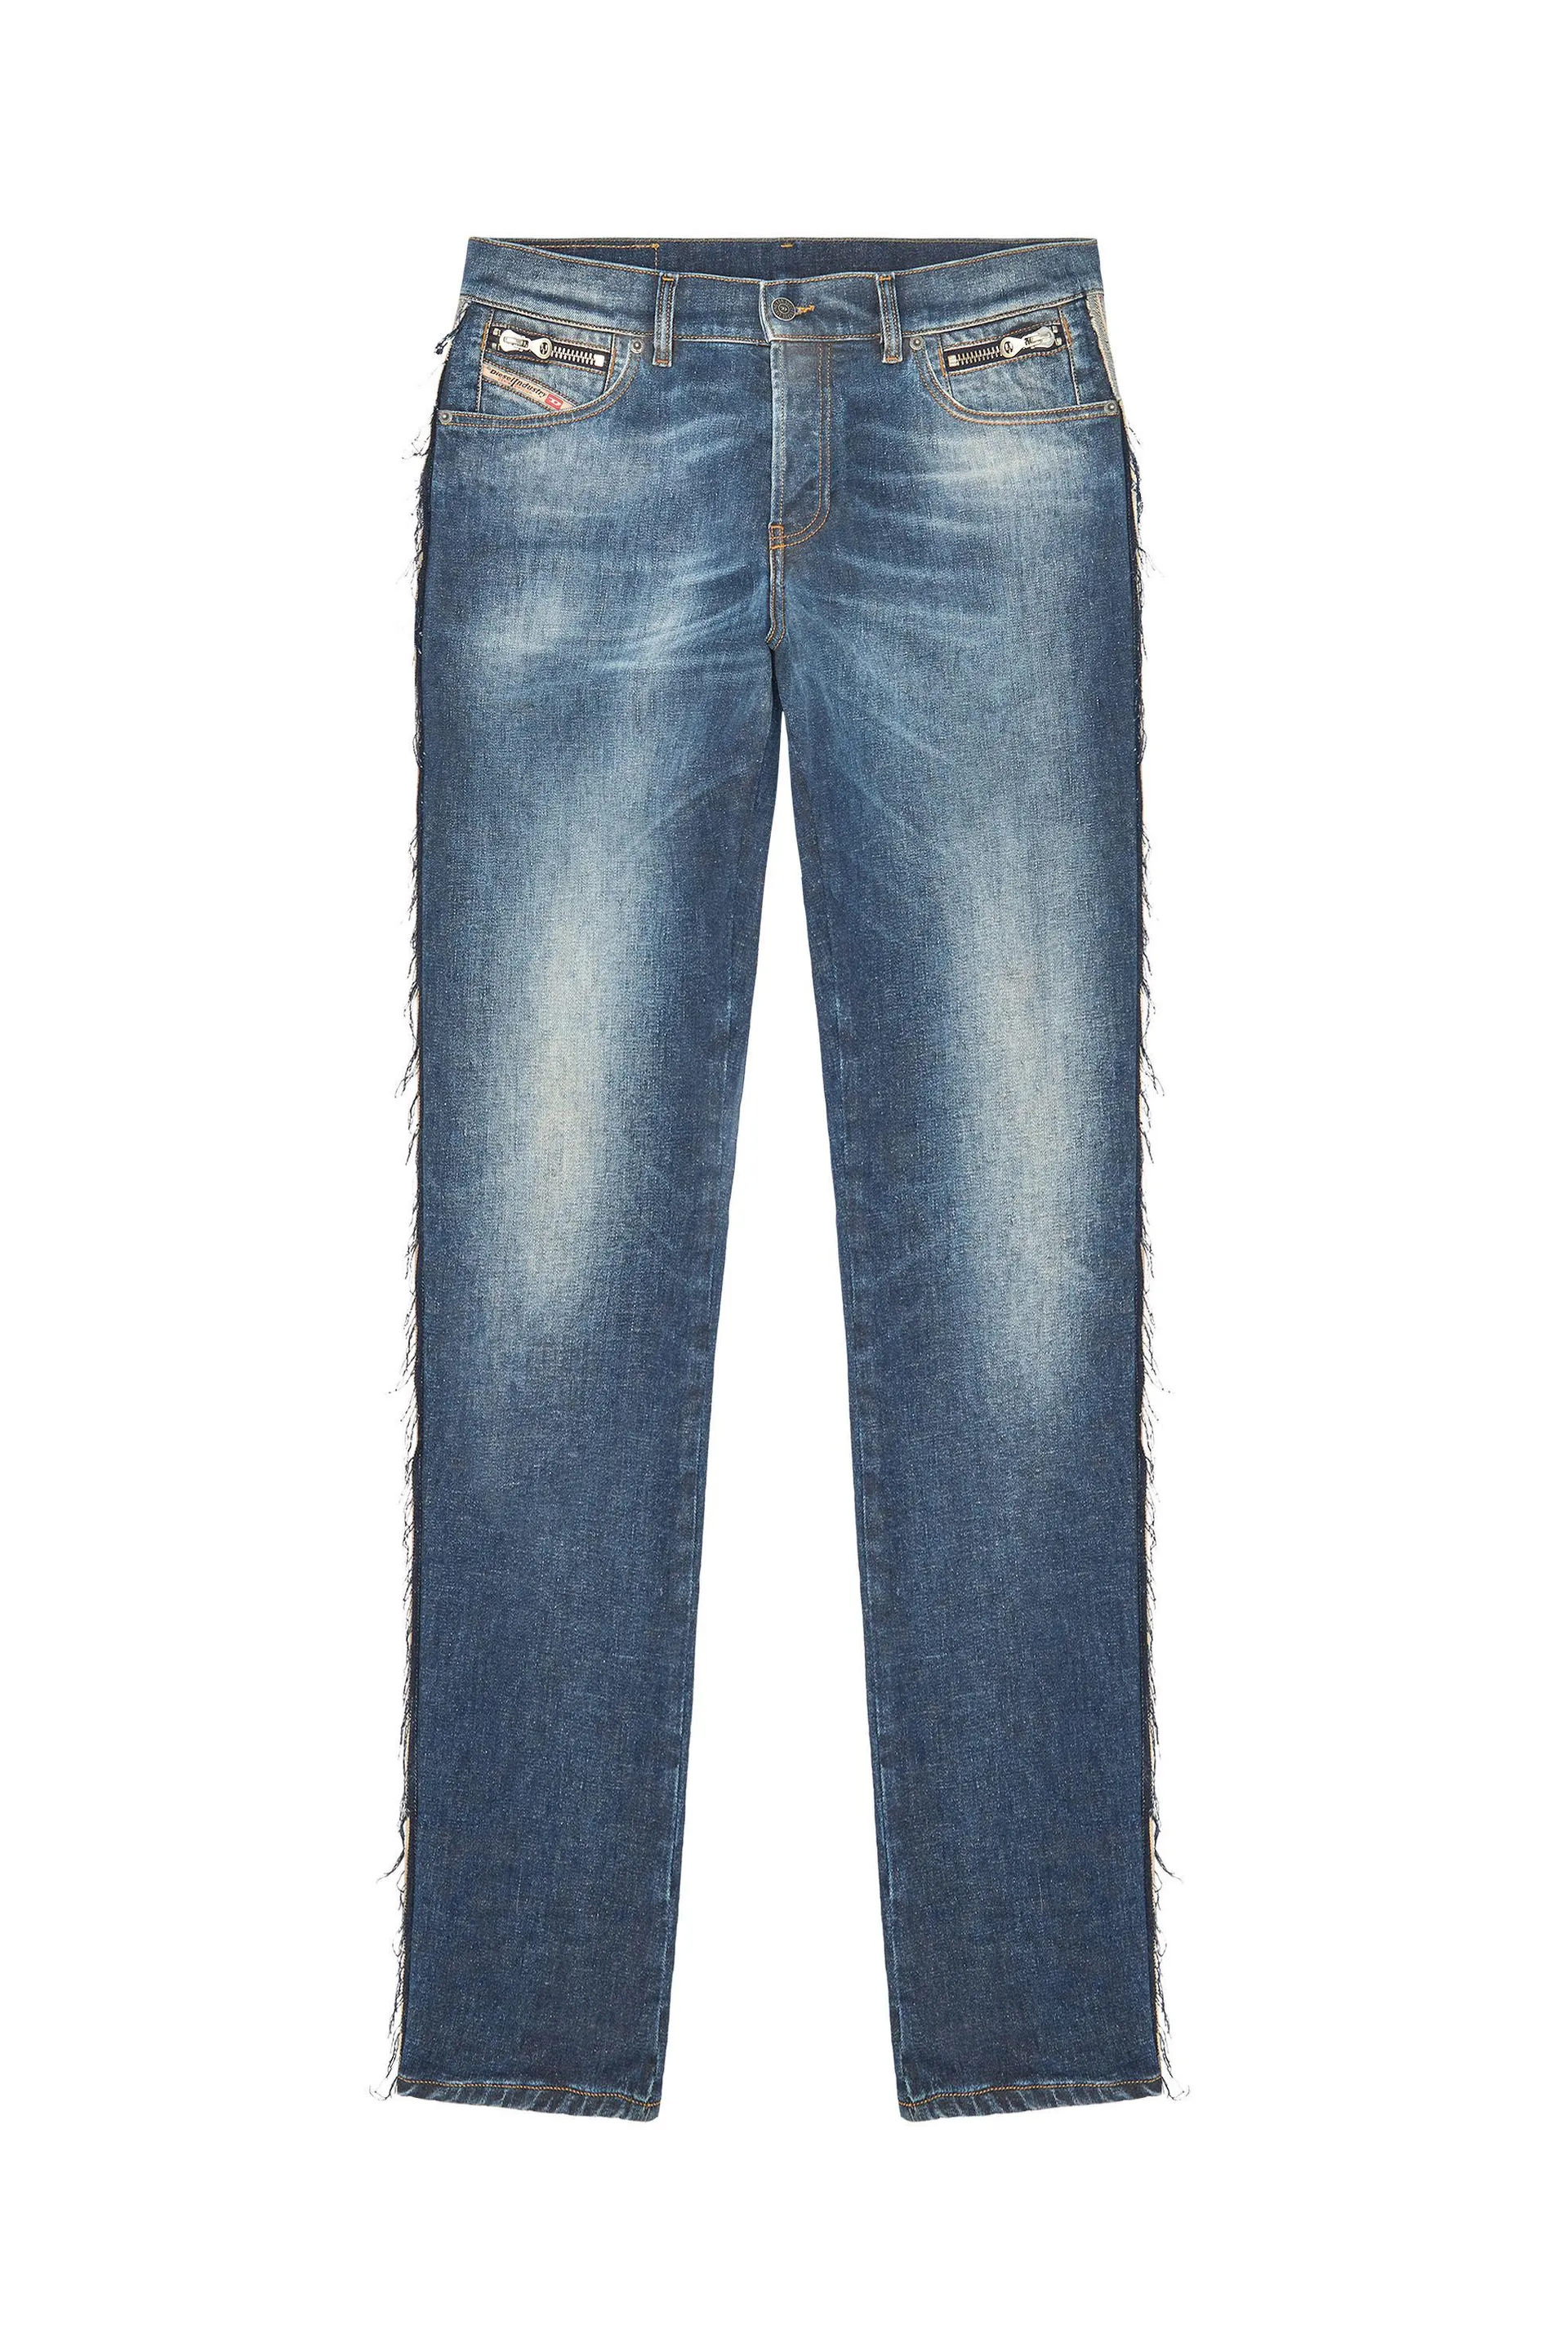 1995 d-sark 09f39 straight jeans